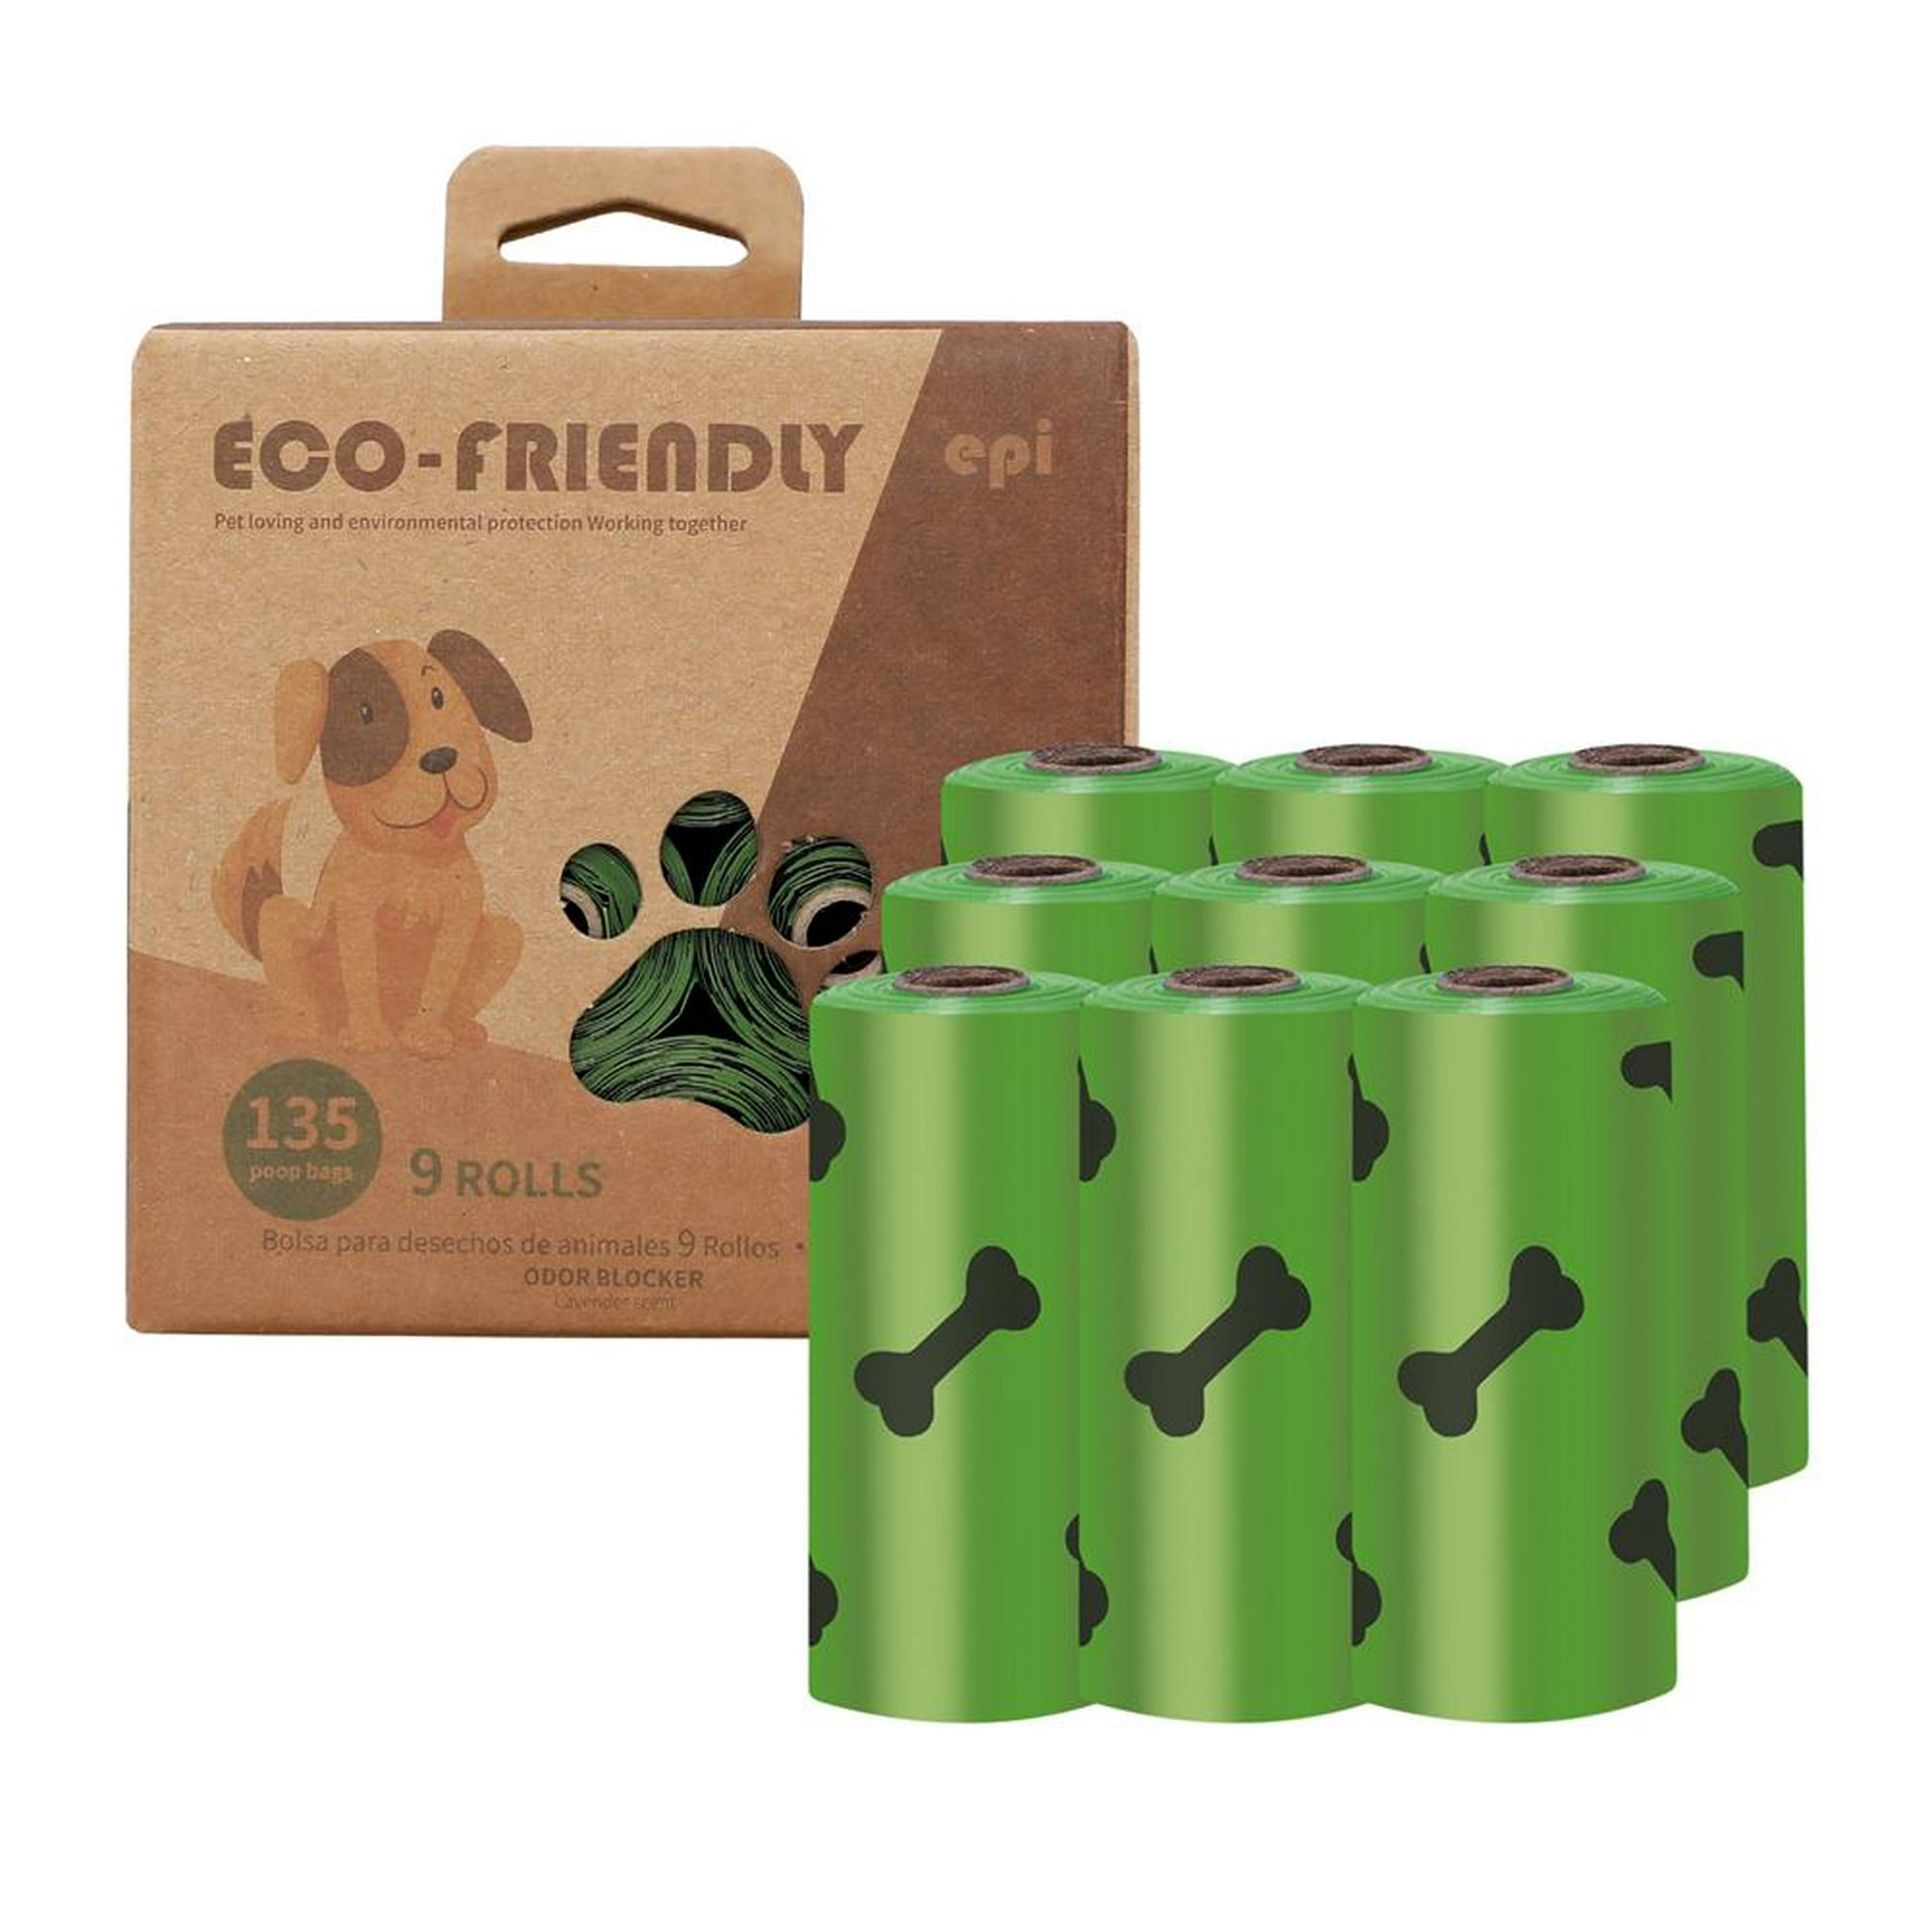 Mascotas :: Accesorios para mascotas :: Bolsas biodegradables para desechos  de perro